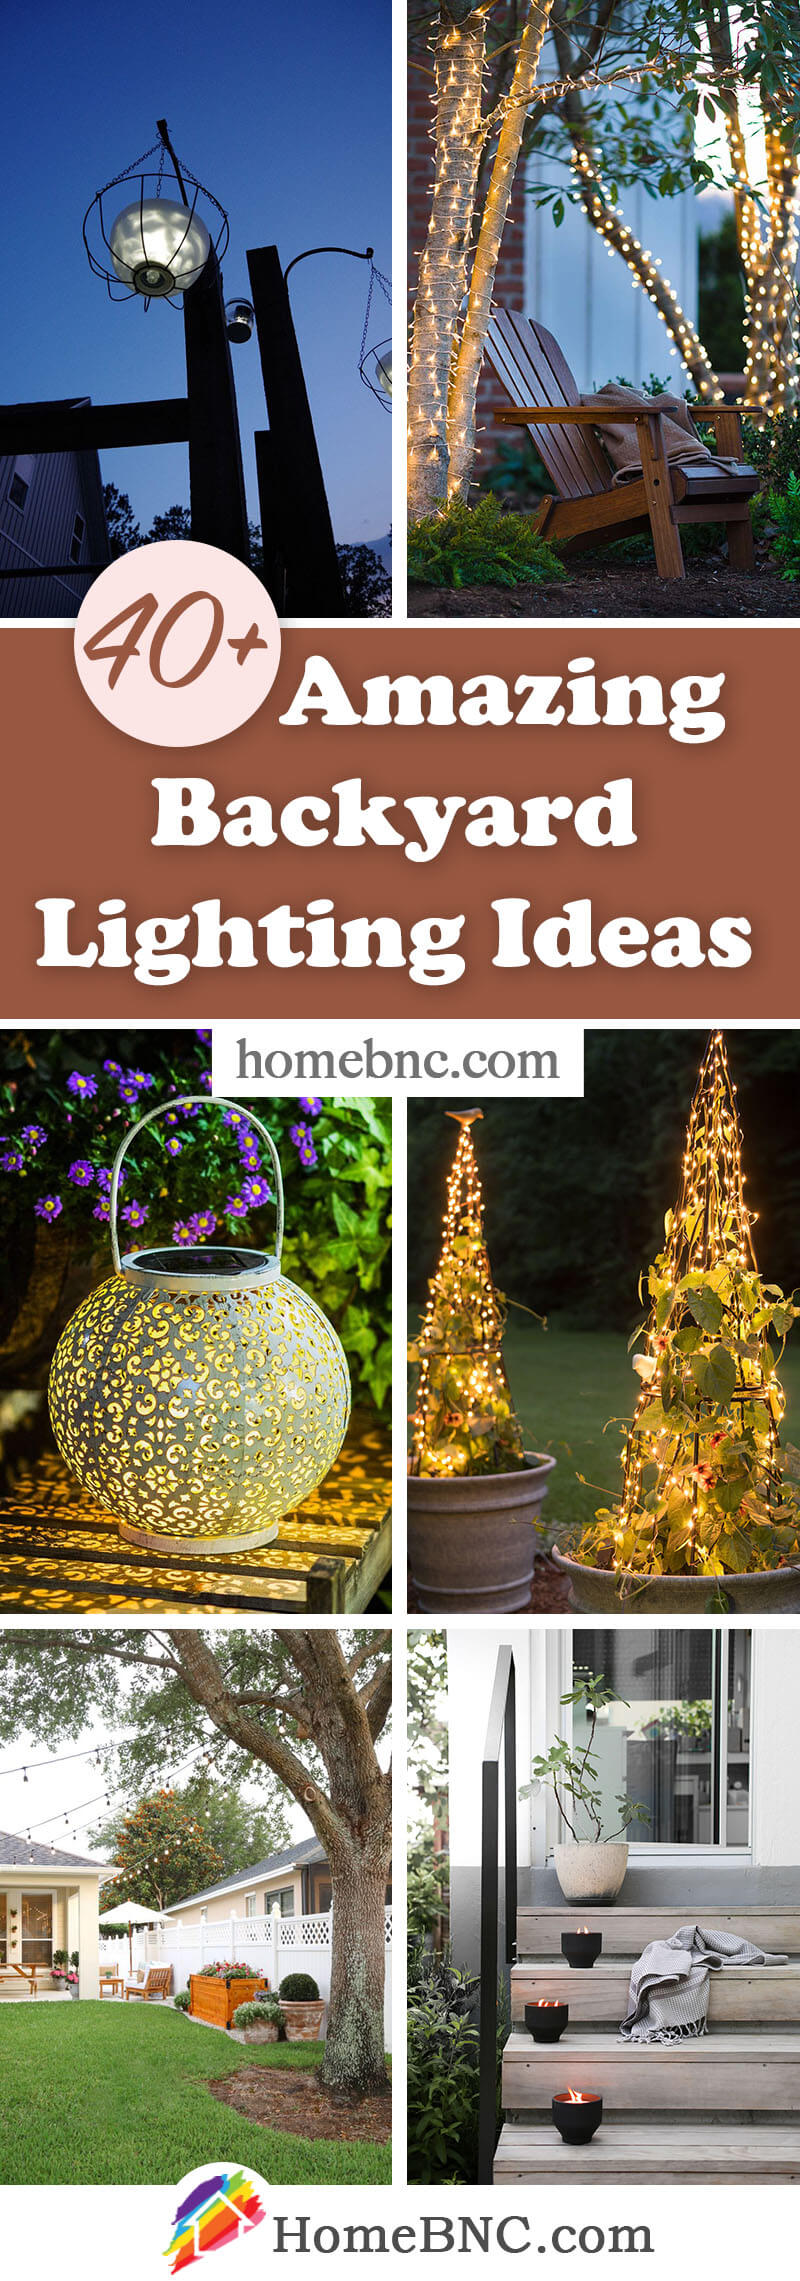 Backyard Lighting Projects